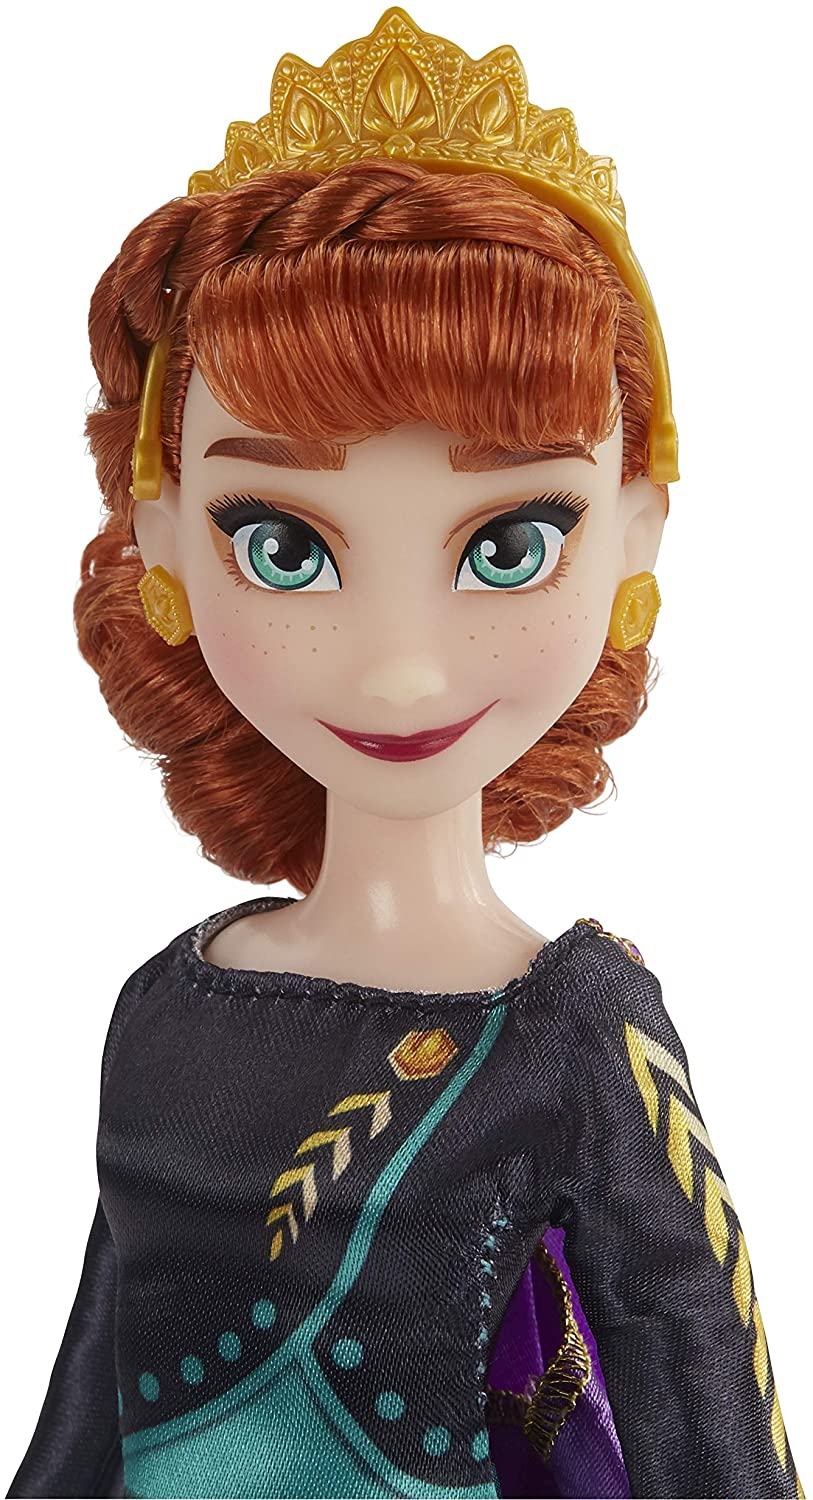 Hasbro disney frozen - regina anna fashion doll - Disney Frozen, DISNEY PRINCESS